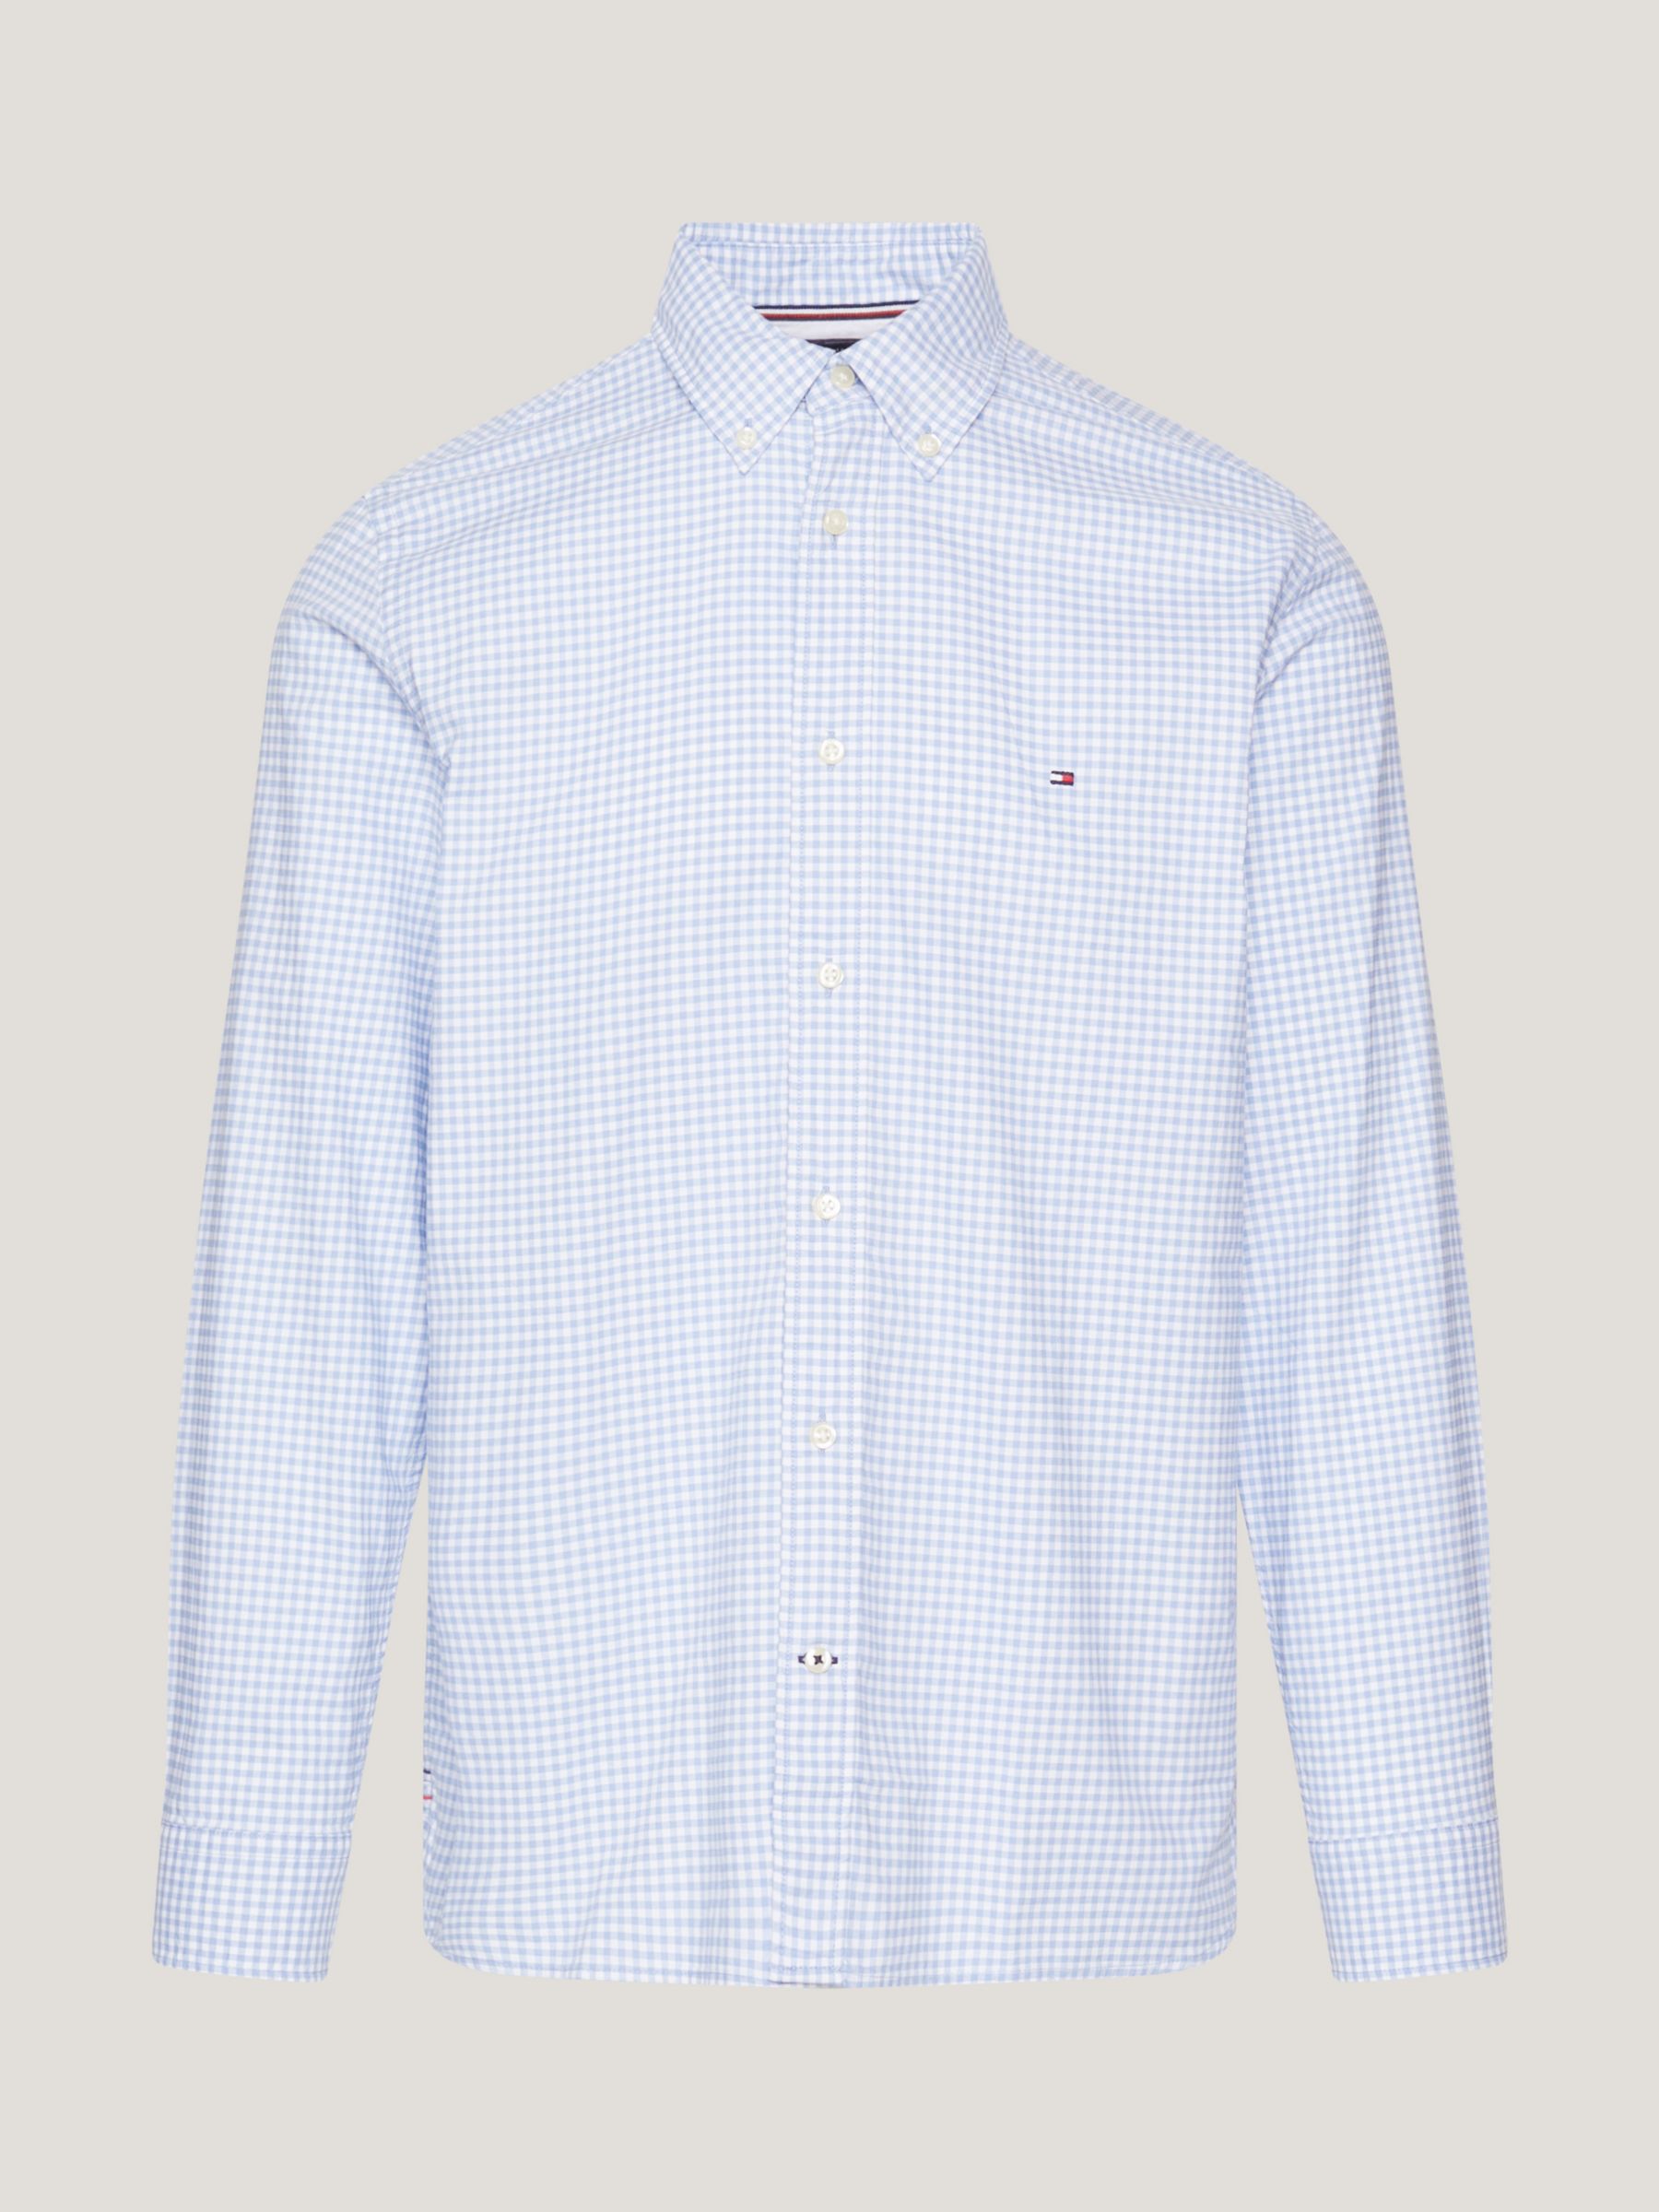 Tommy Hilfiger 1985 Oxford Gingham Shirt, Blue/White, L